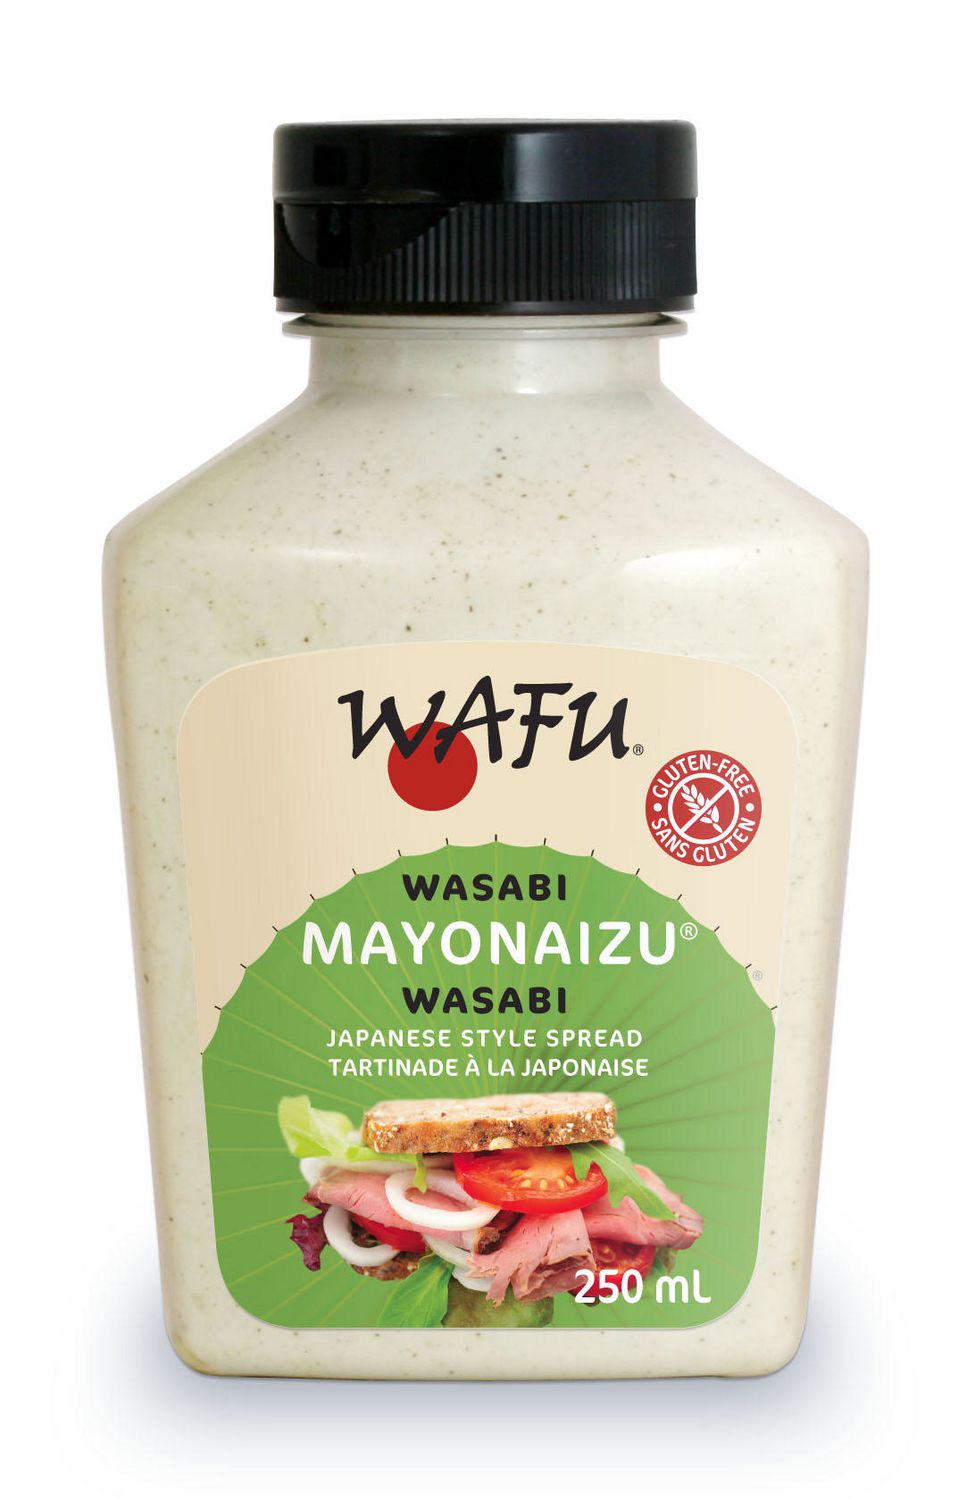 Wafu Wasabi Mayonaizu Japanese Style Spread, 250mL 